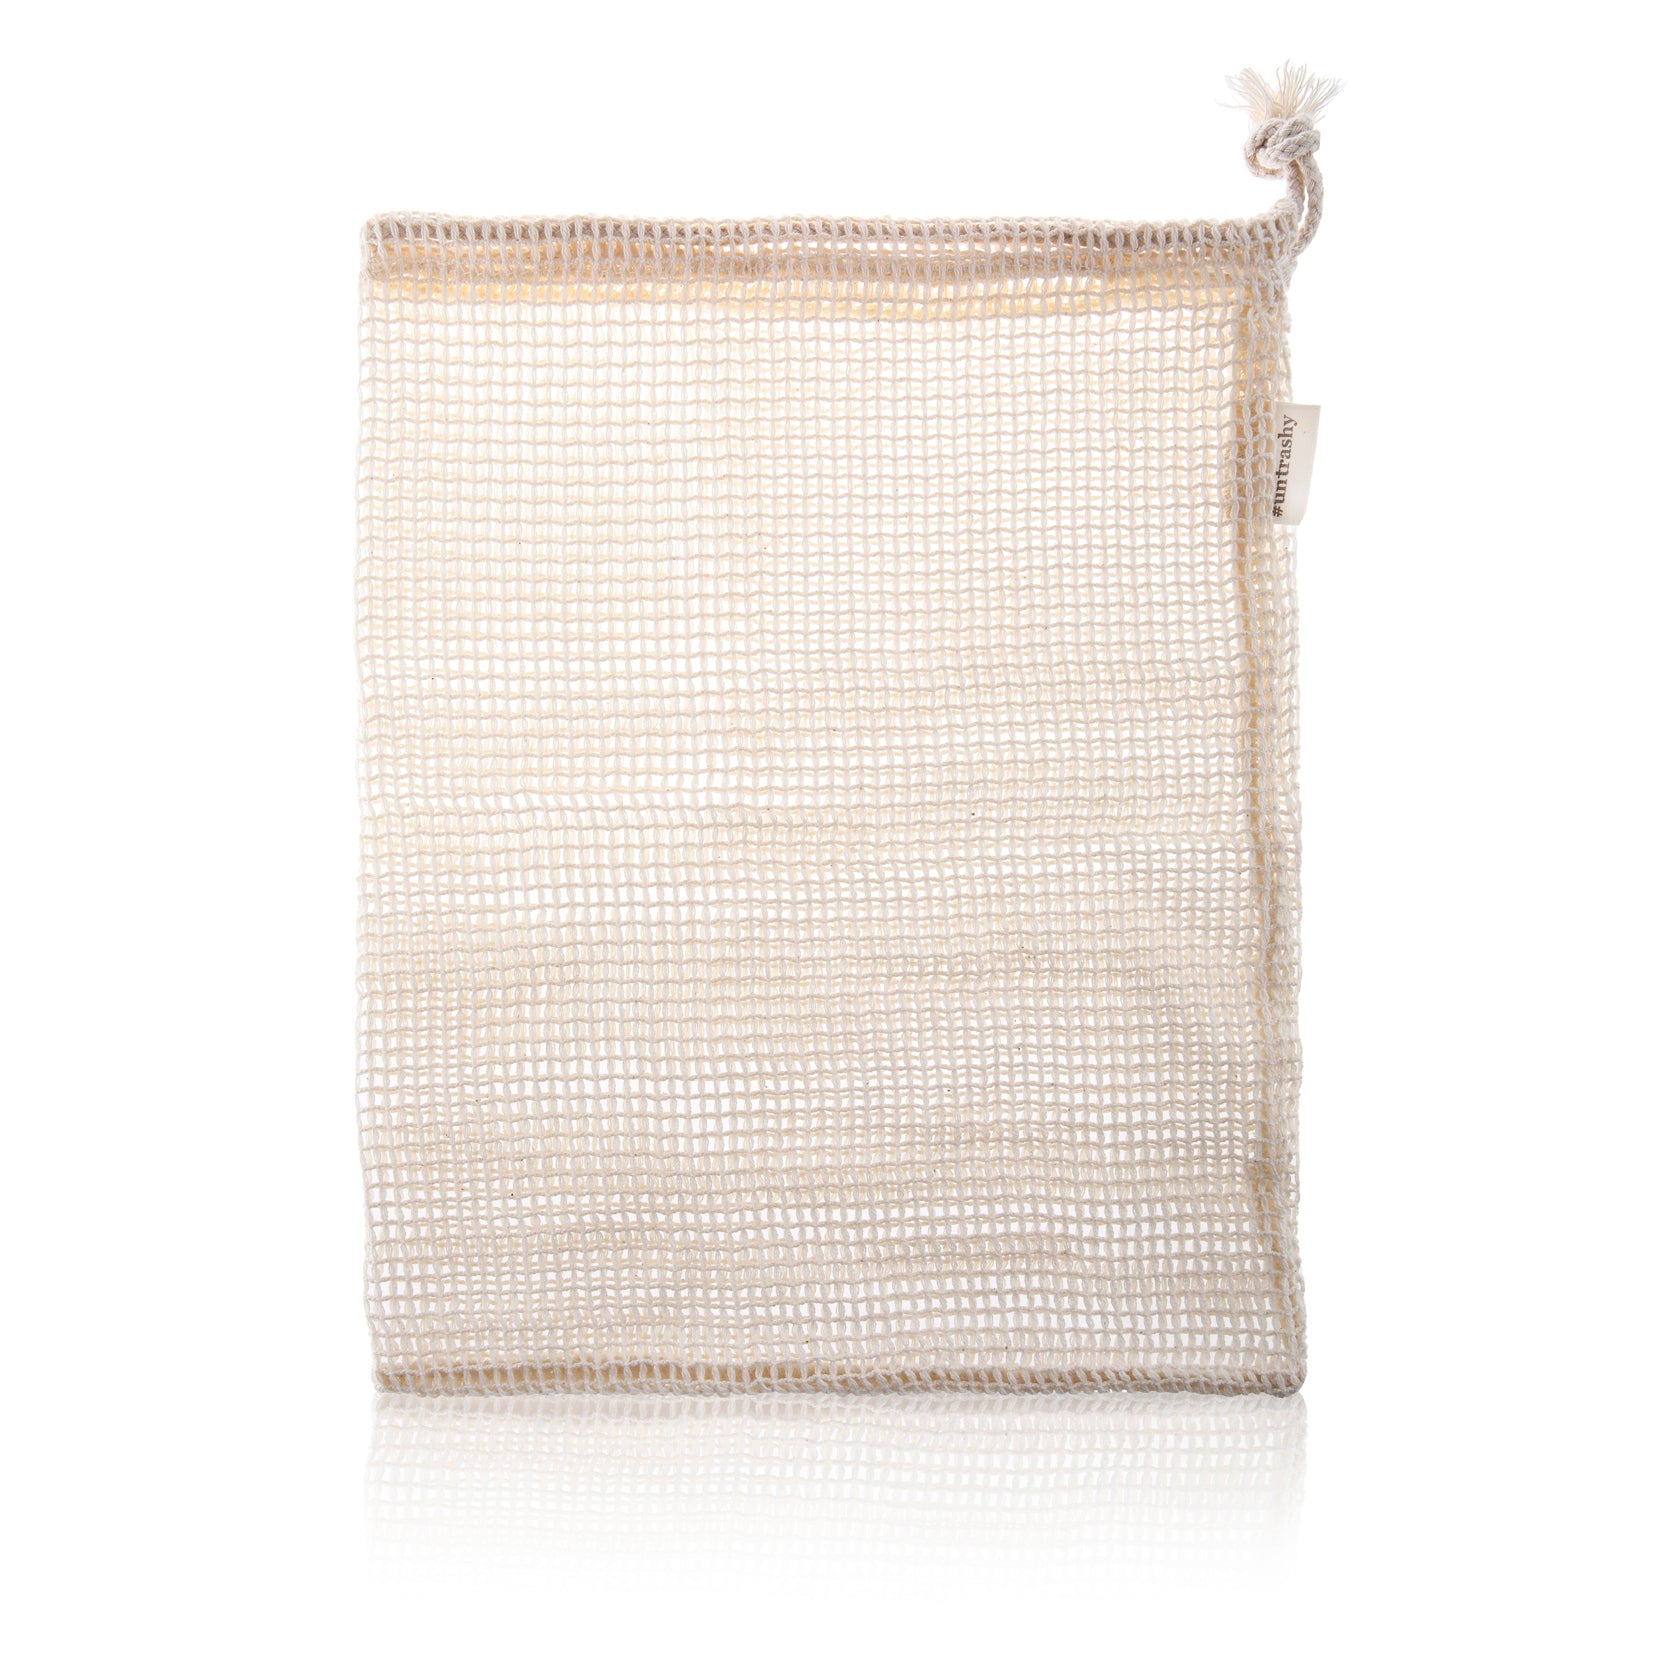 Organic cotton mesh veggie bag